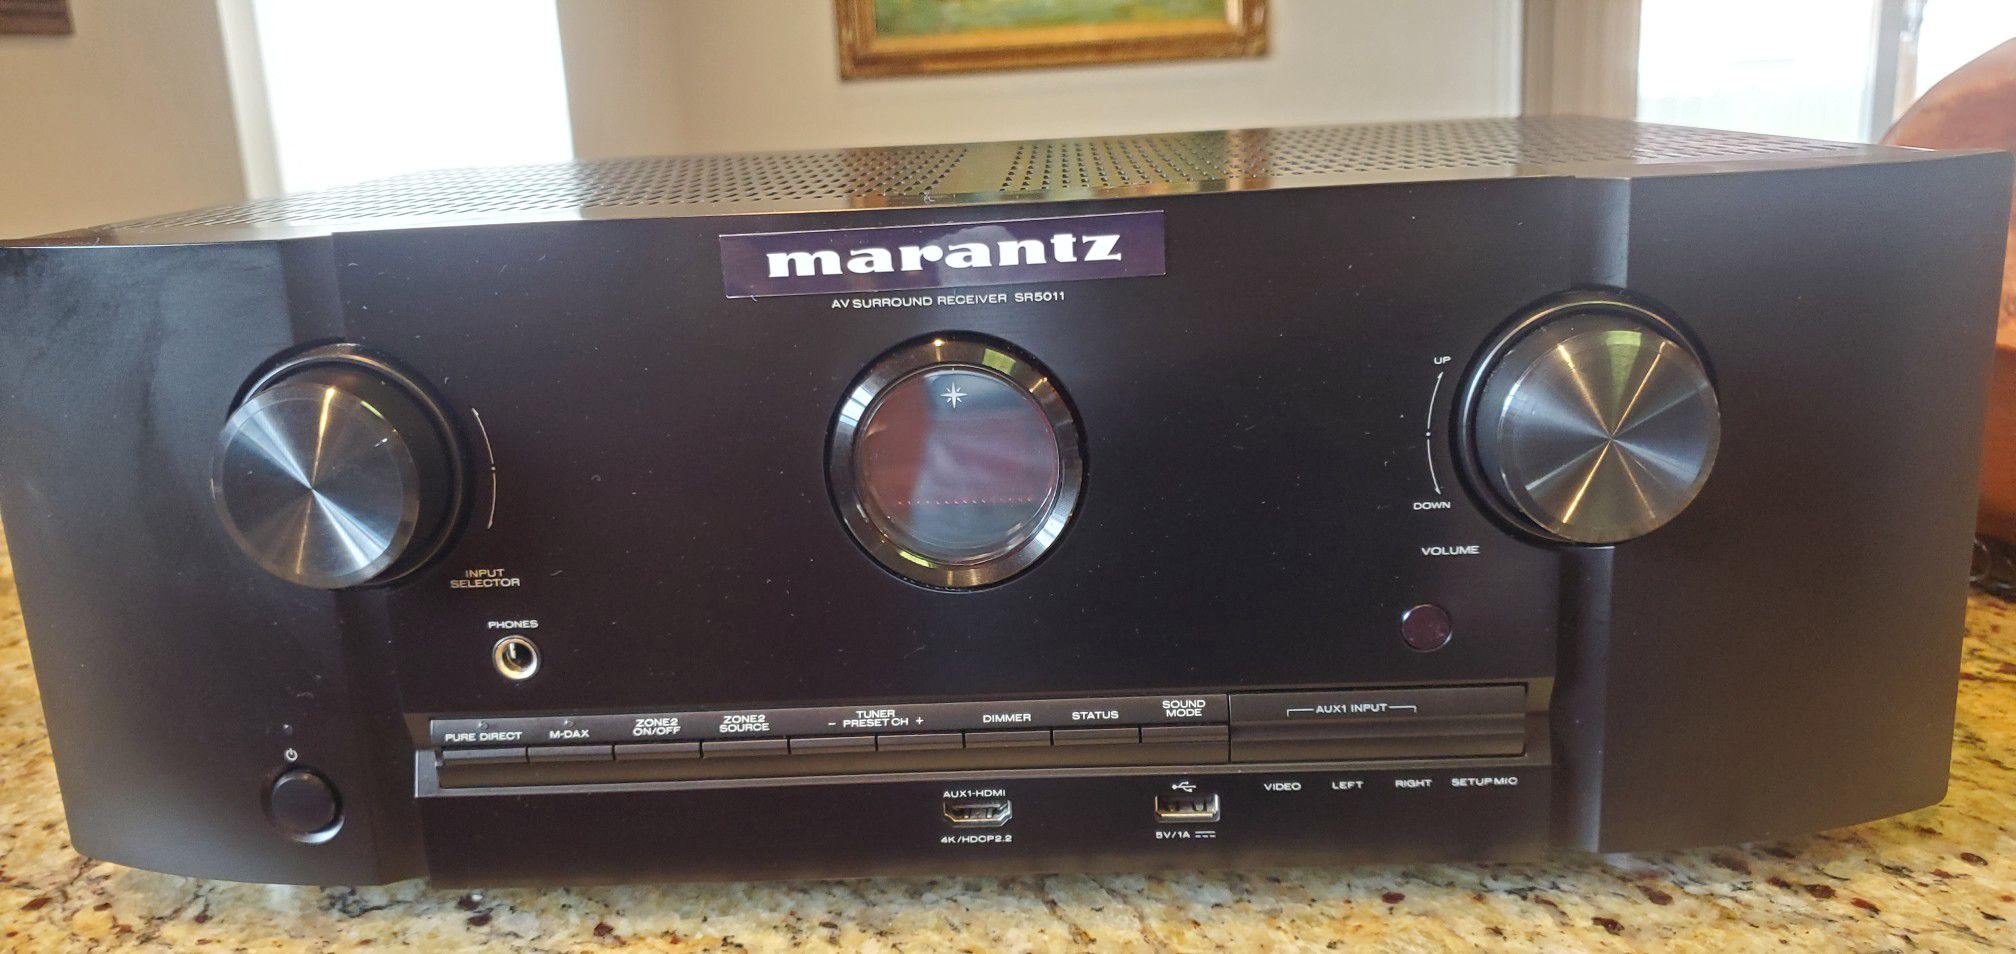 Marantz Receiver sr 5011. 7.2 channel 100 w per channel. 4k HDR, Dolby Atmos, DTS:X. HDAM circuit boards